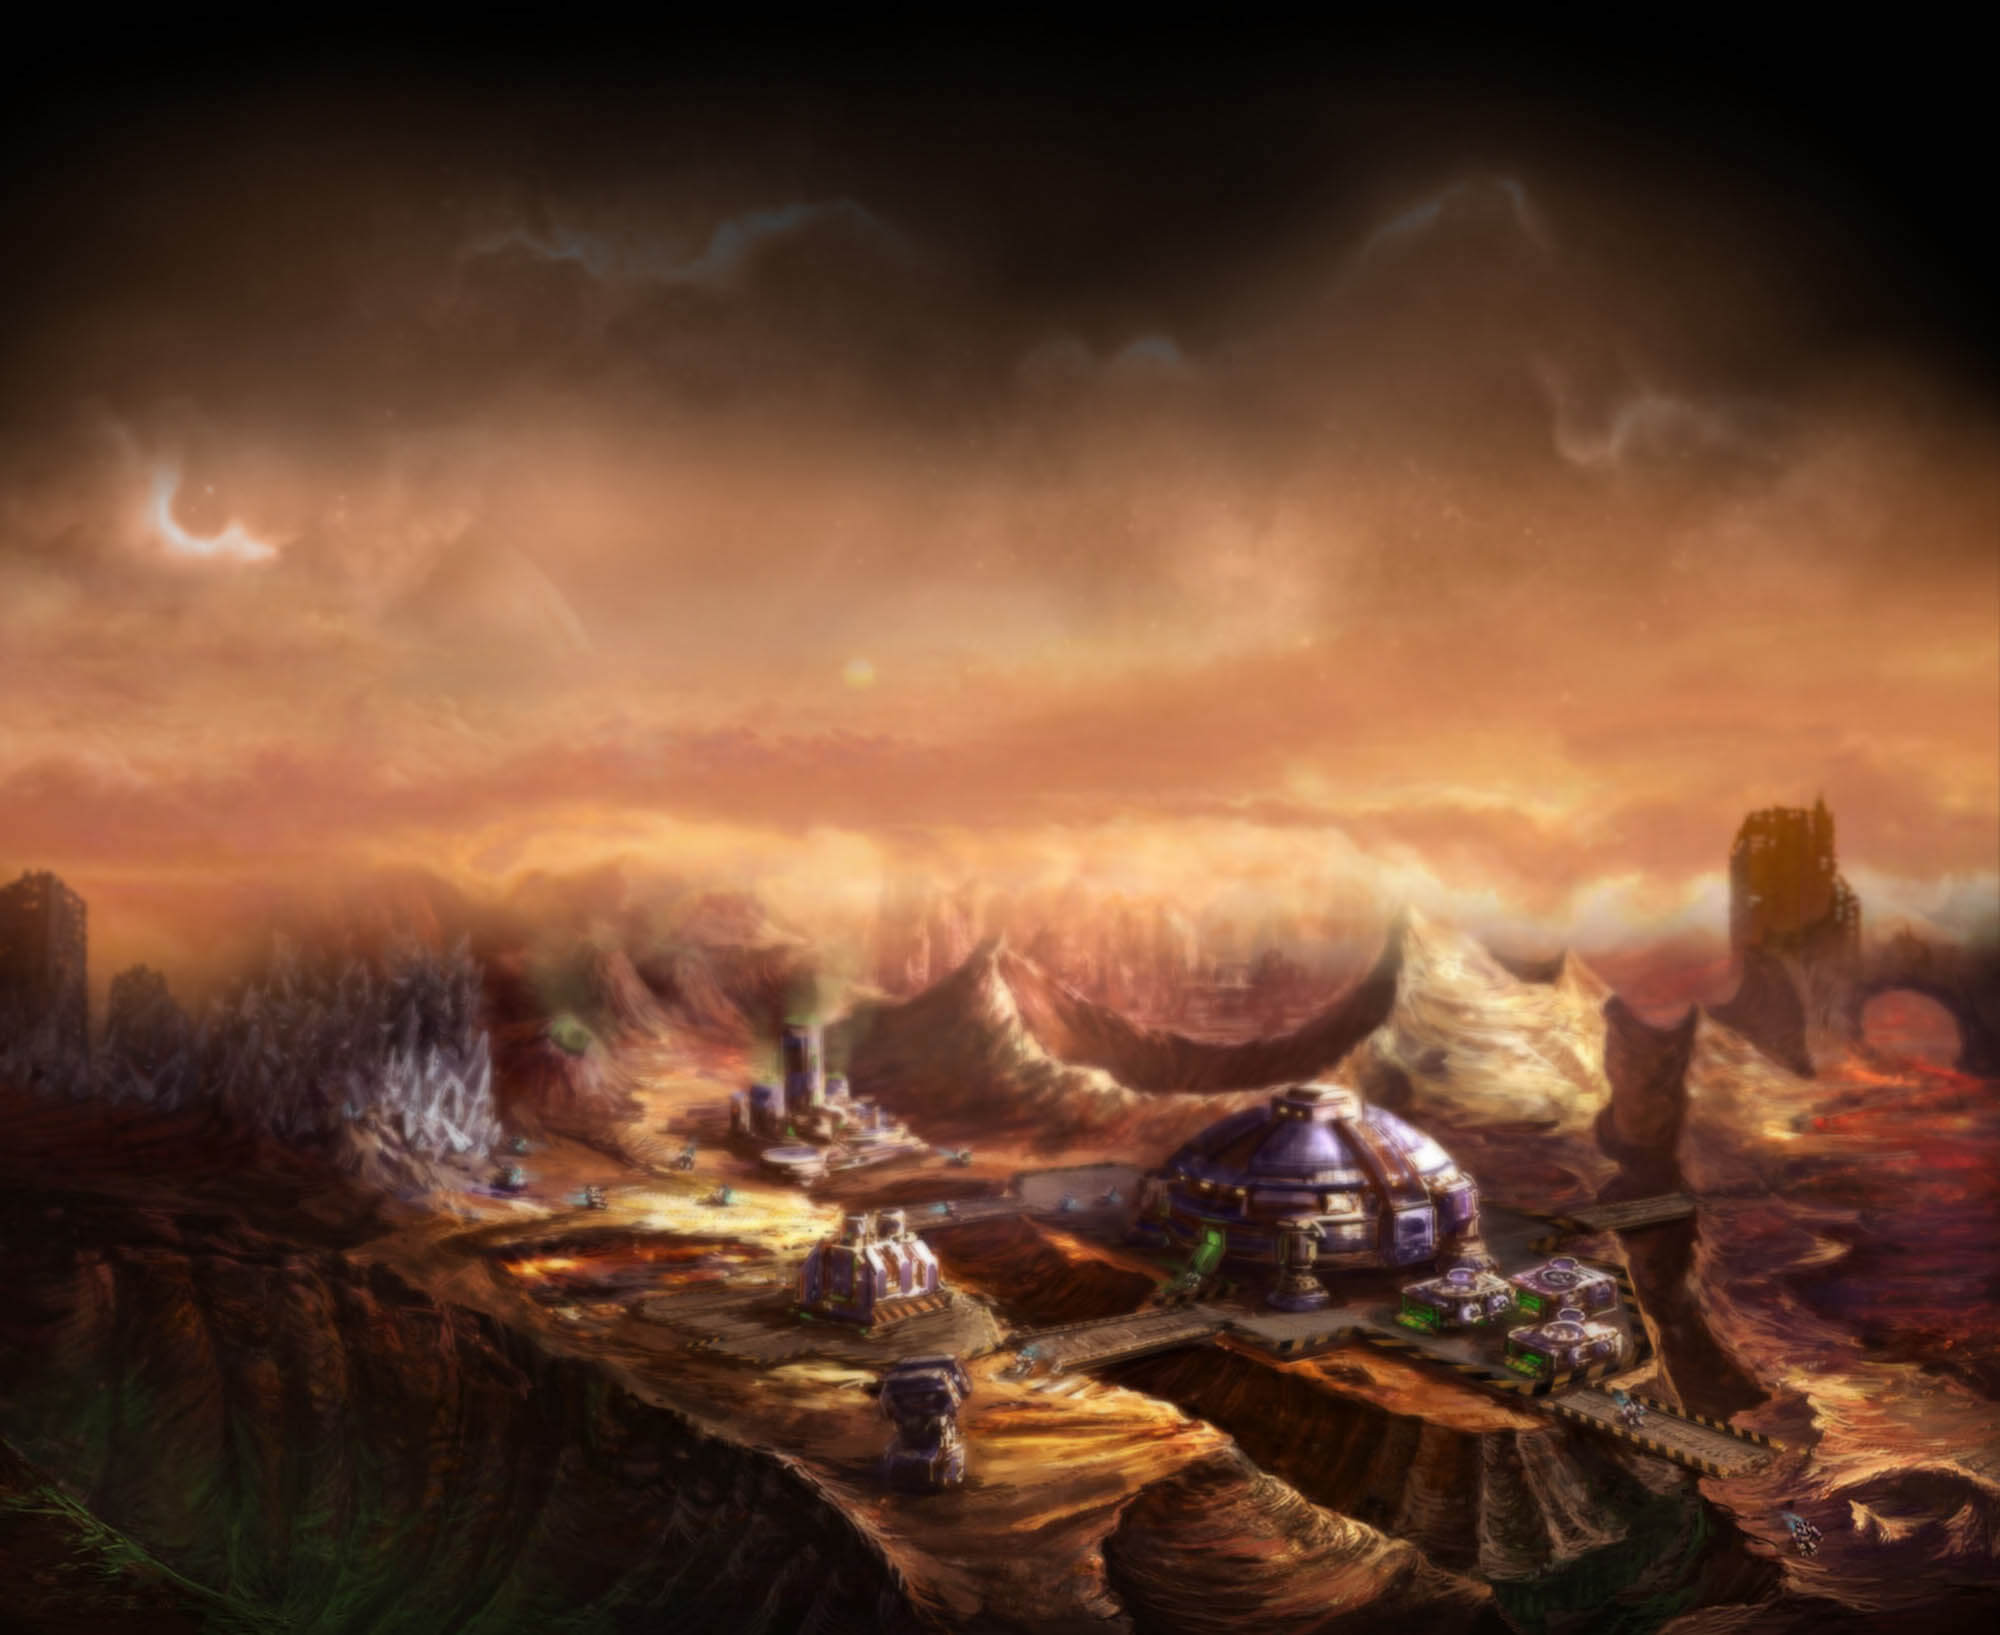 StarCraft: Remastered Picture